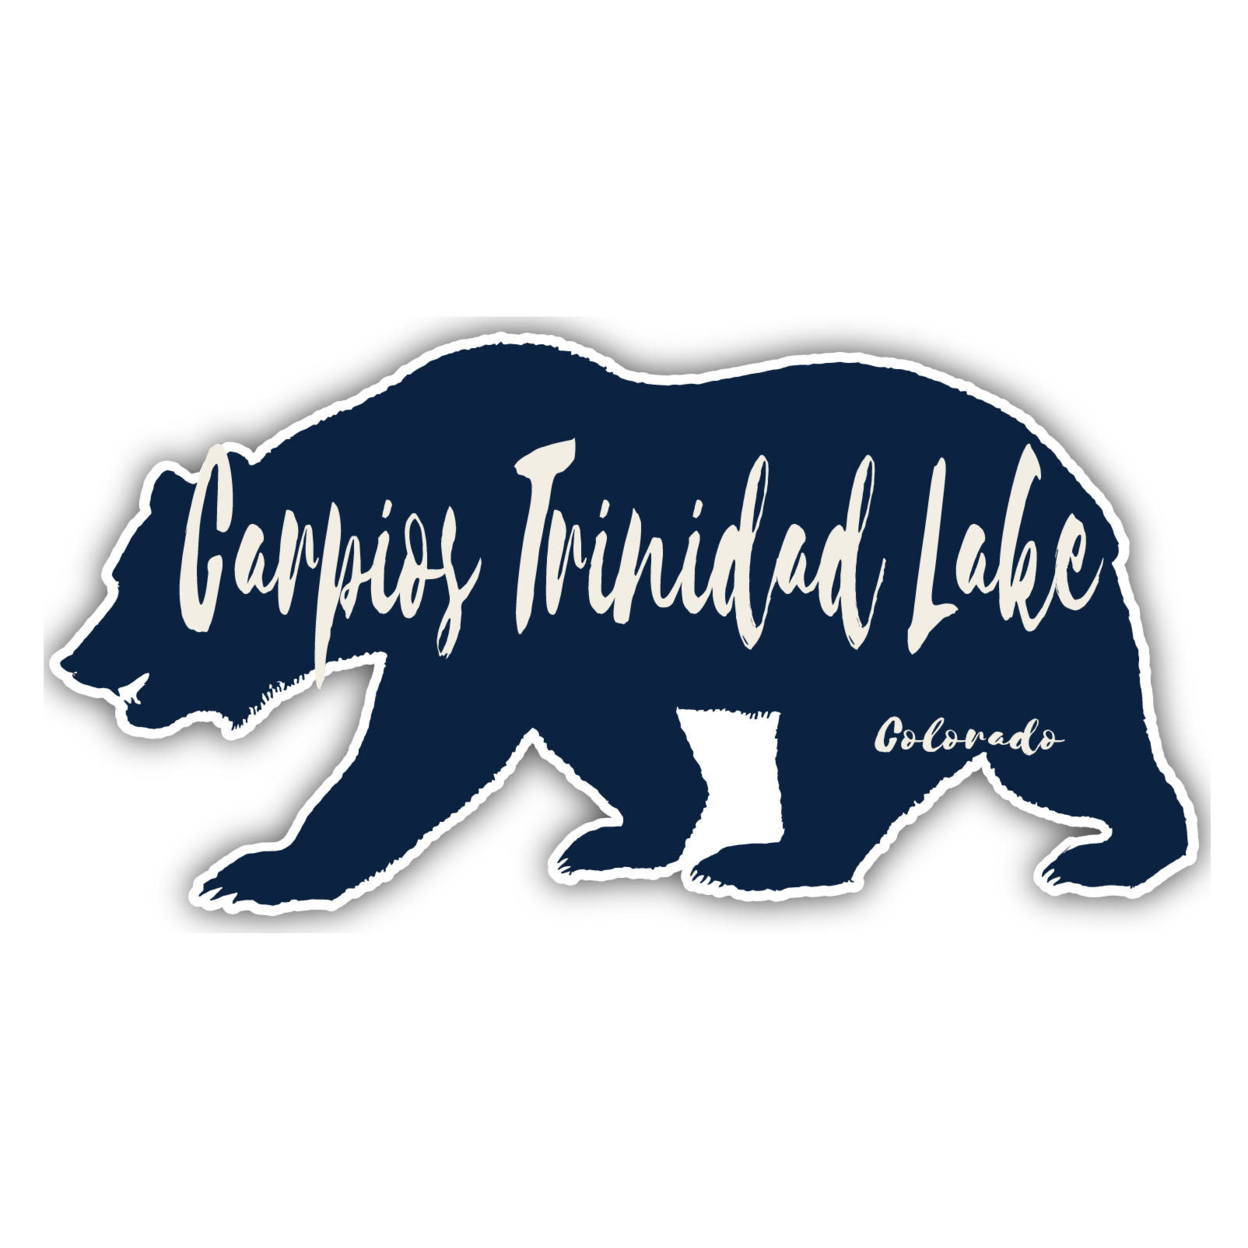 Carpios Trinidad Lake Colorado Souvenir Decorative Stickers (Choose Theme And Size) - Single Unit, 6-Inch, Bear